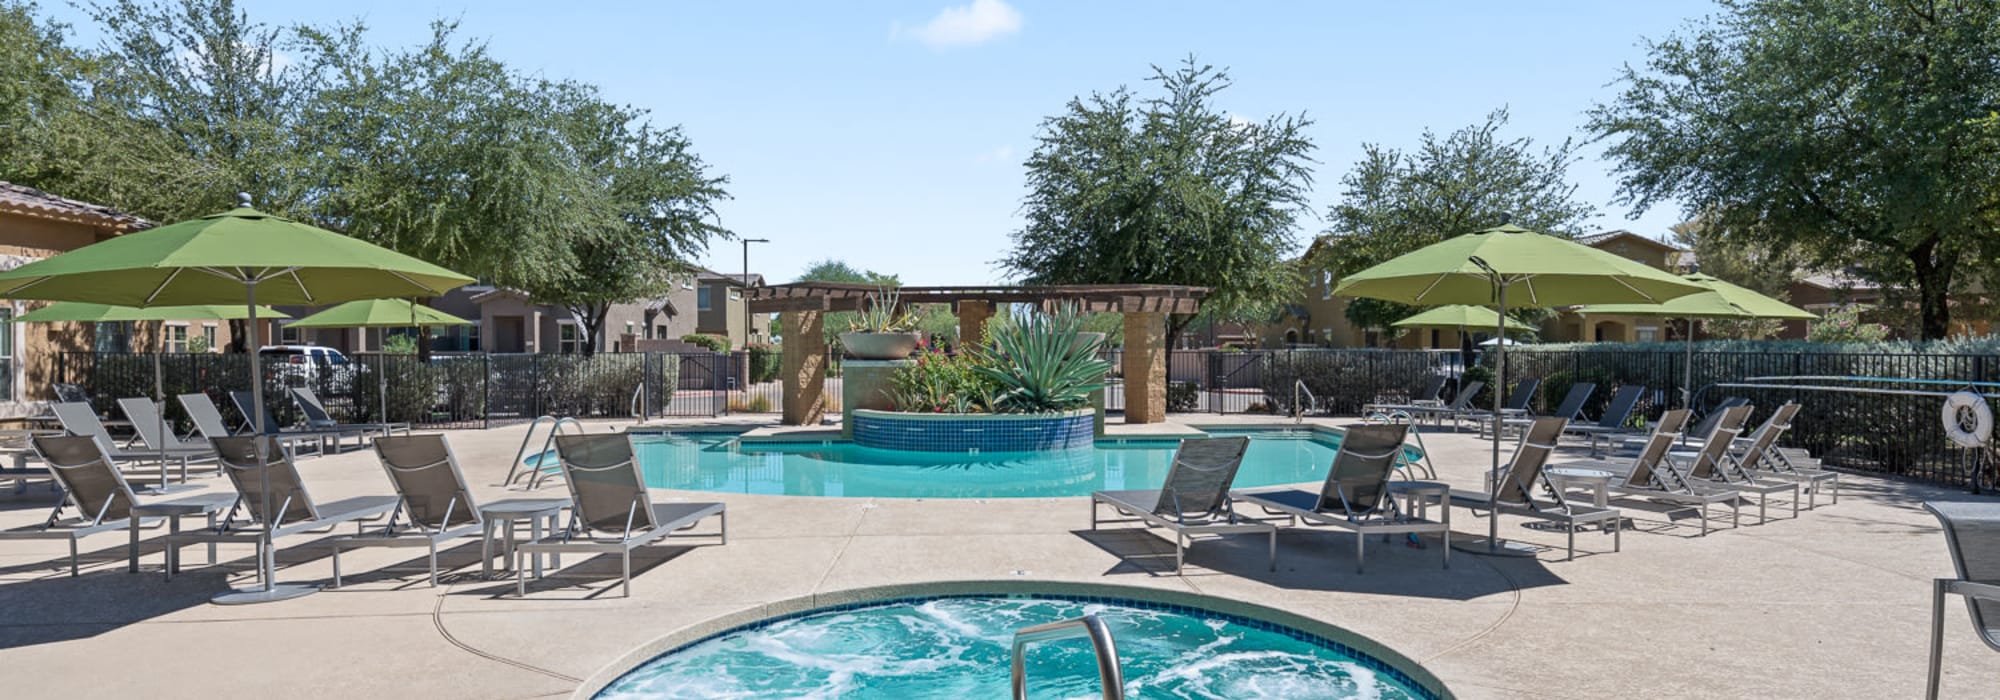 Swimming pool and spa at Sierra Verde in Surprise, Arizona